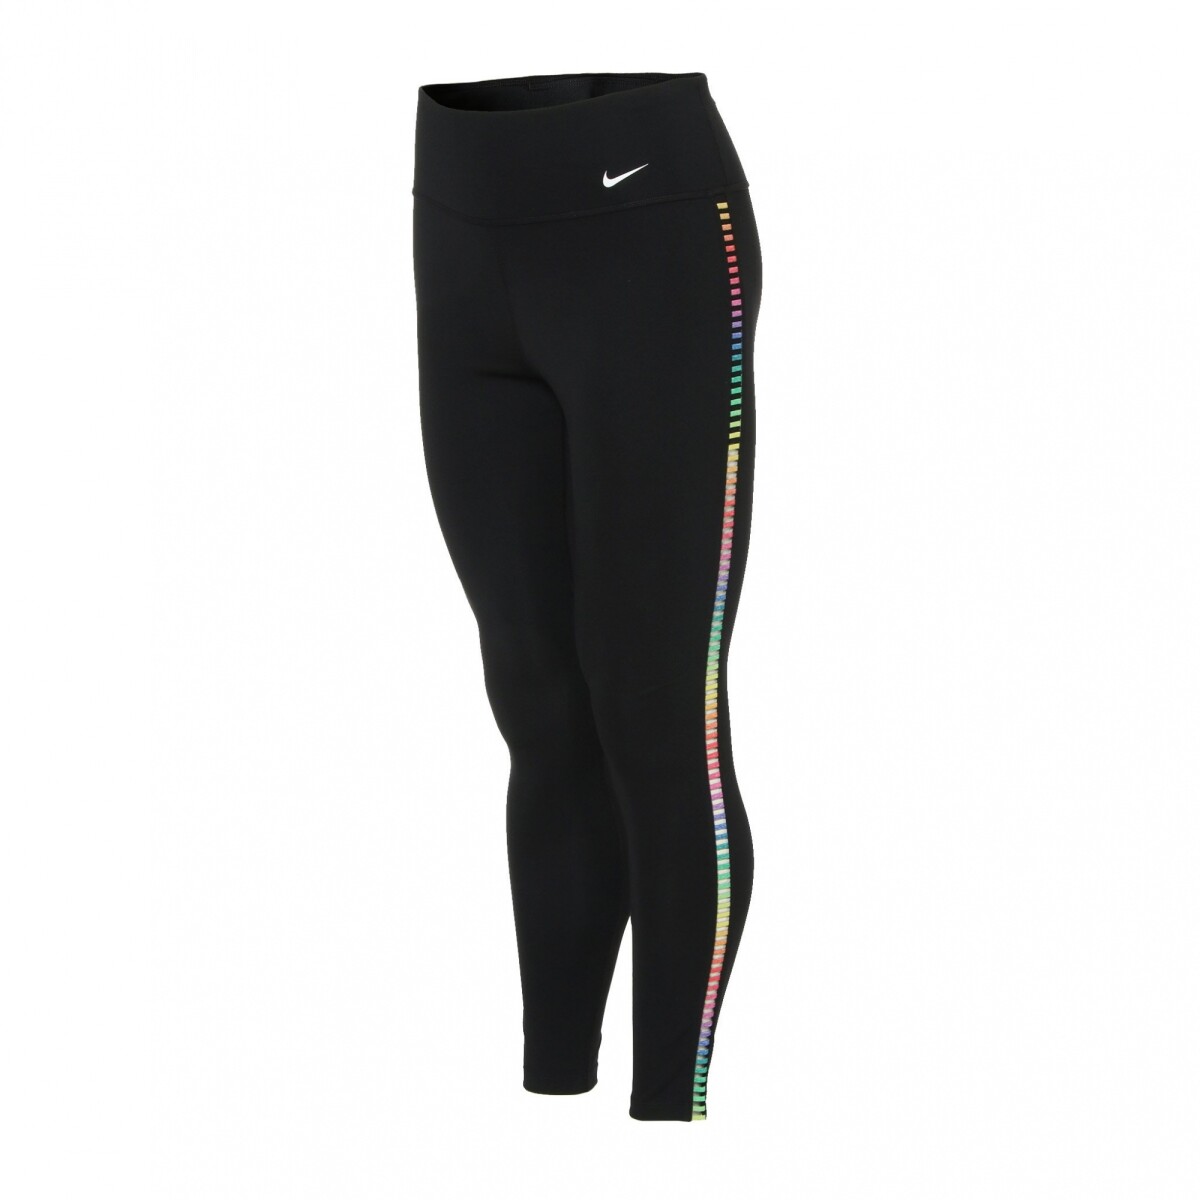 Calza Nike One Rainbow Running dama Negro - Color Único 